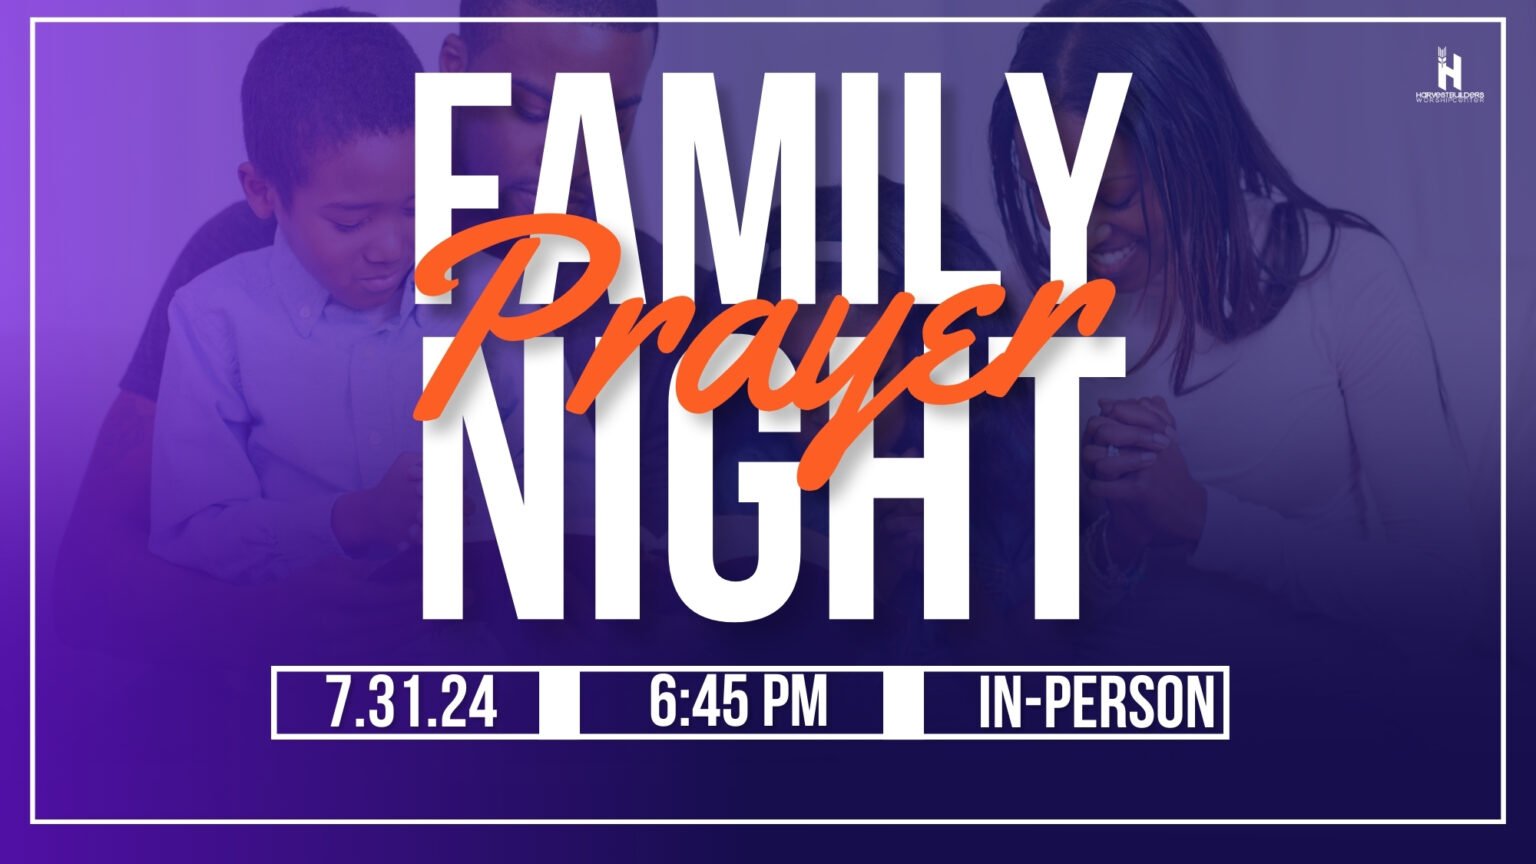 Family Prayer Night 7.31.24